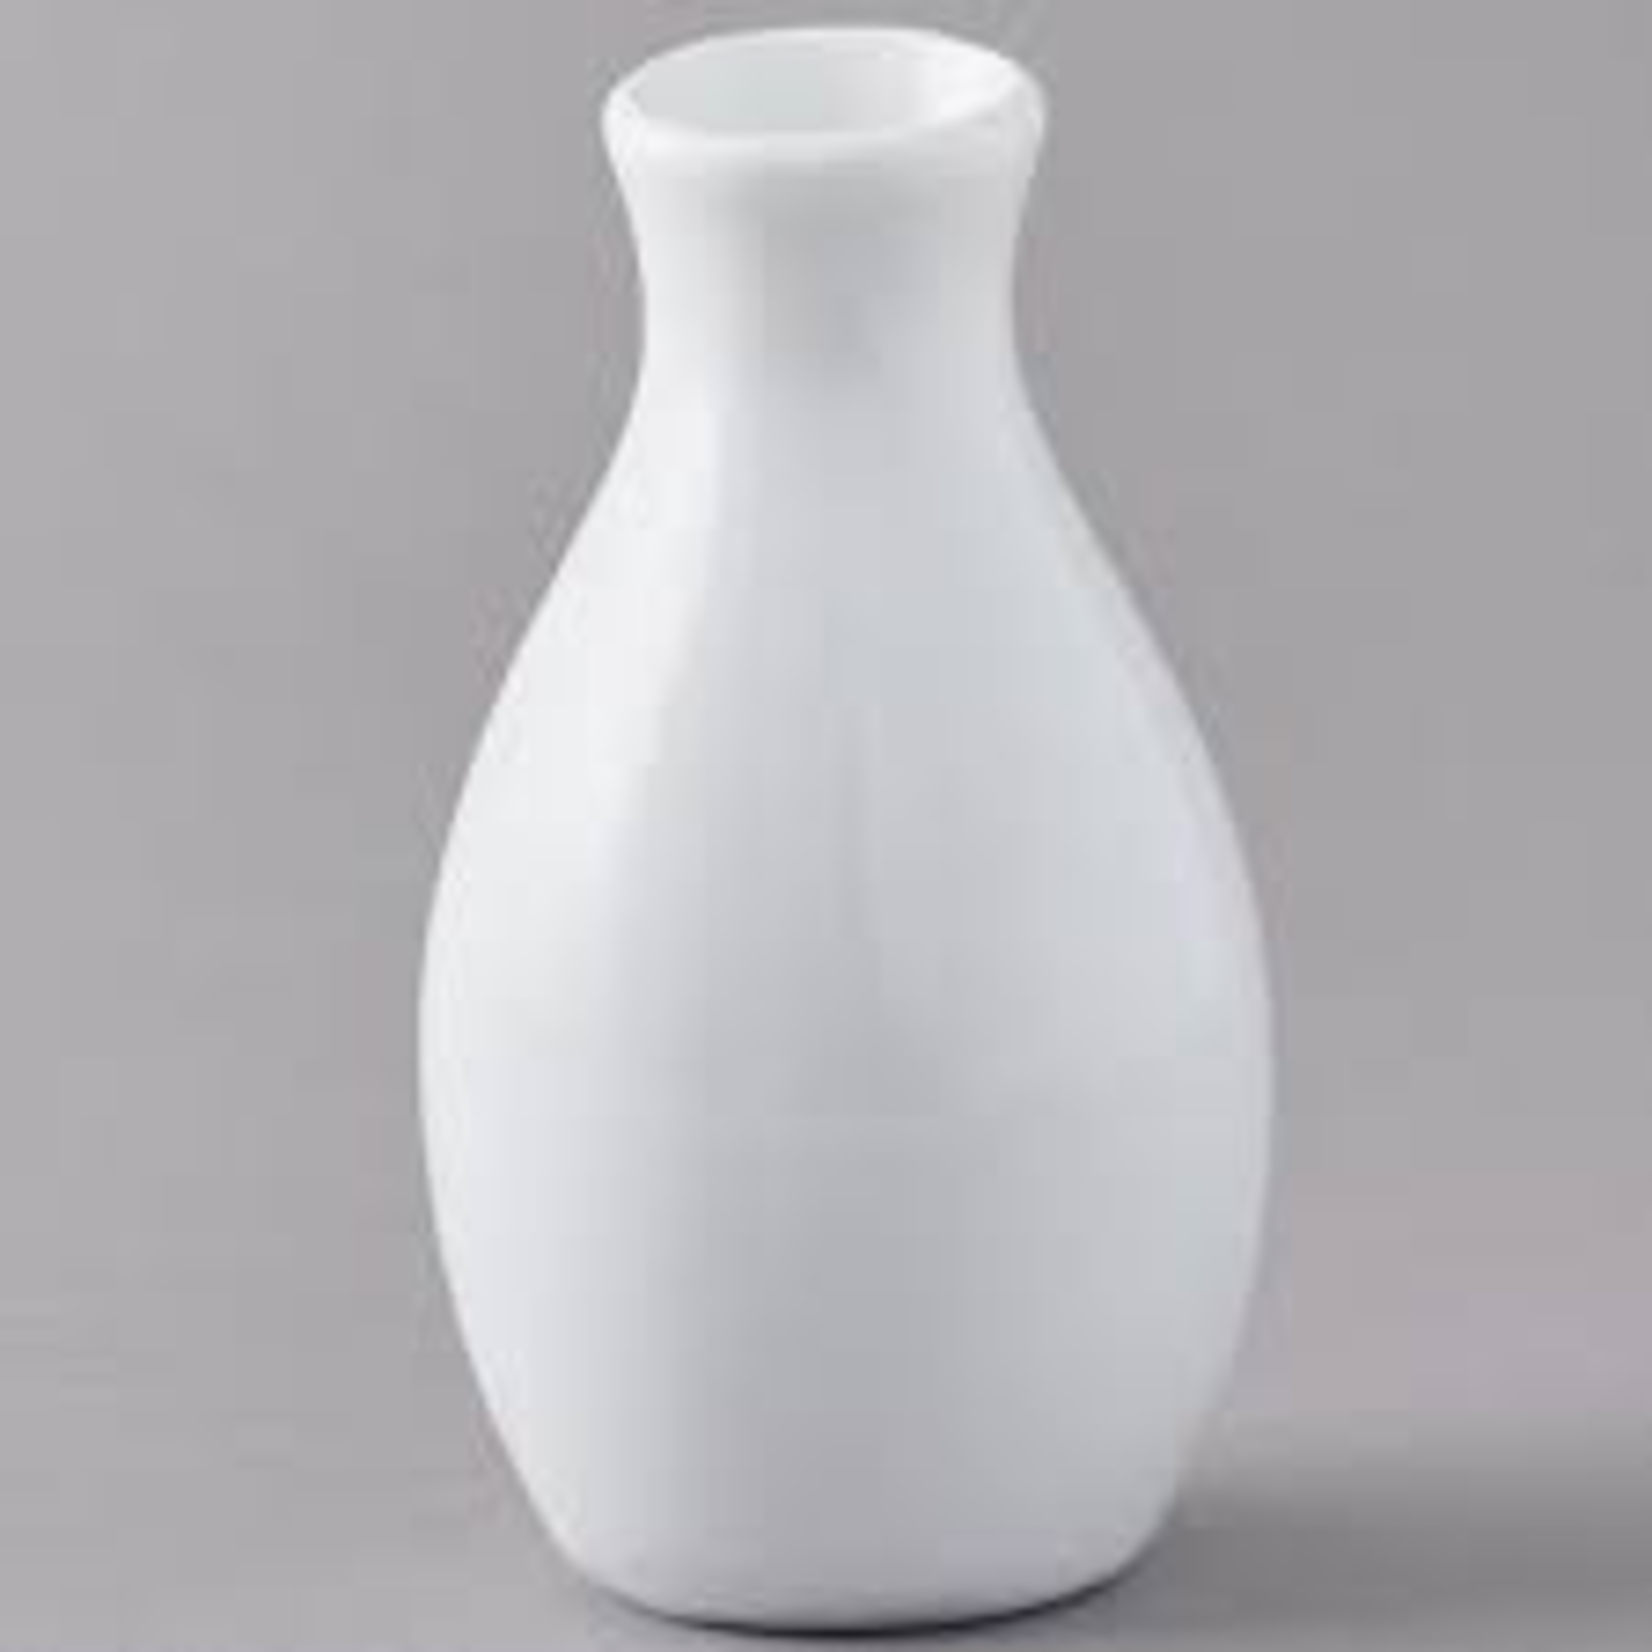 AMERICAN METALCRAFT, INC BVJGG4 AMC White Ceramic Bud Vase Jug